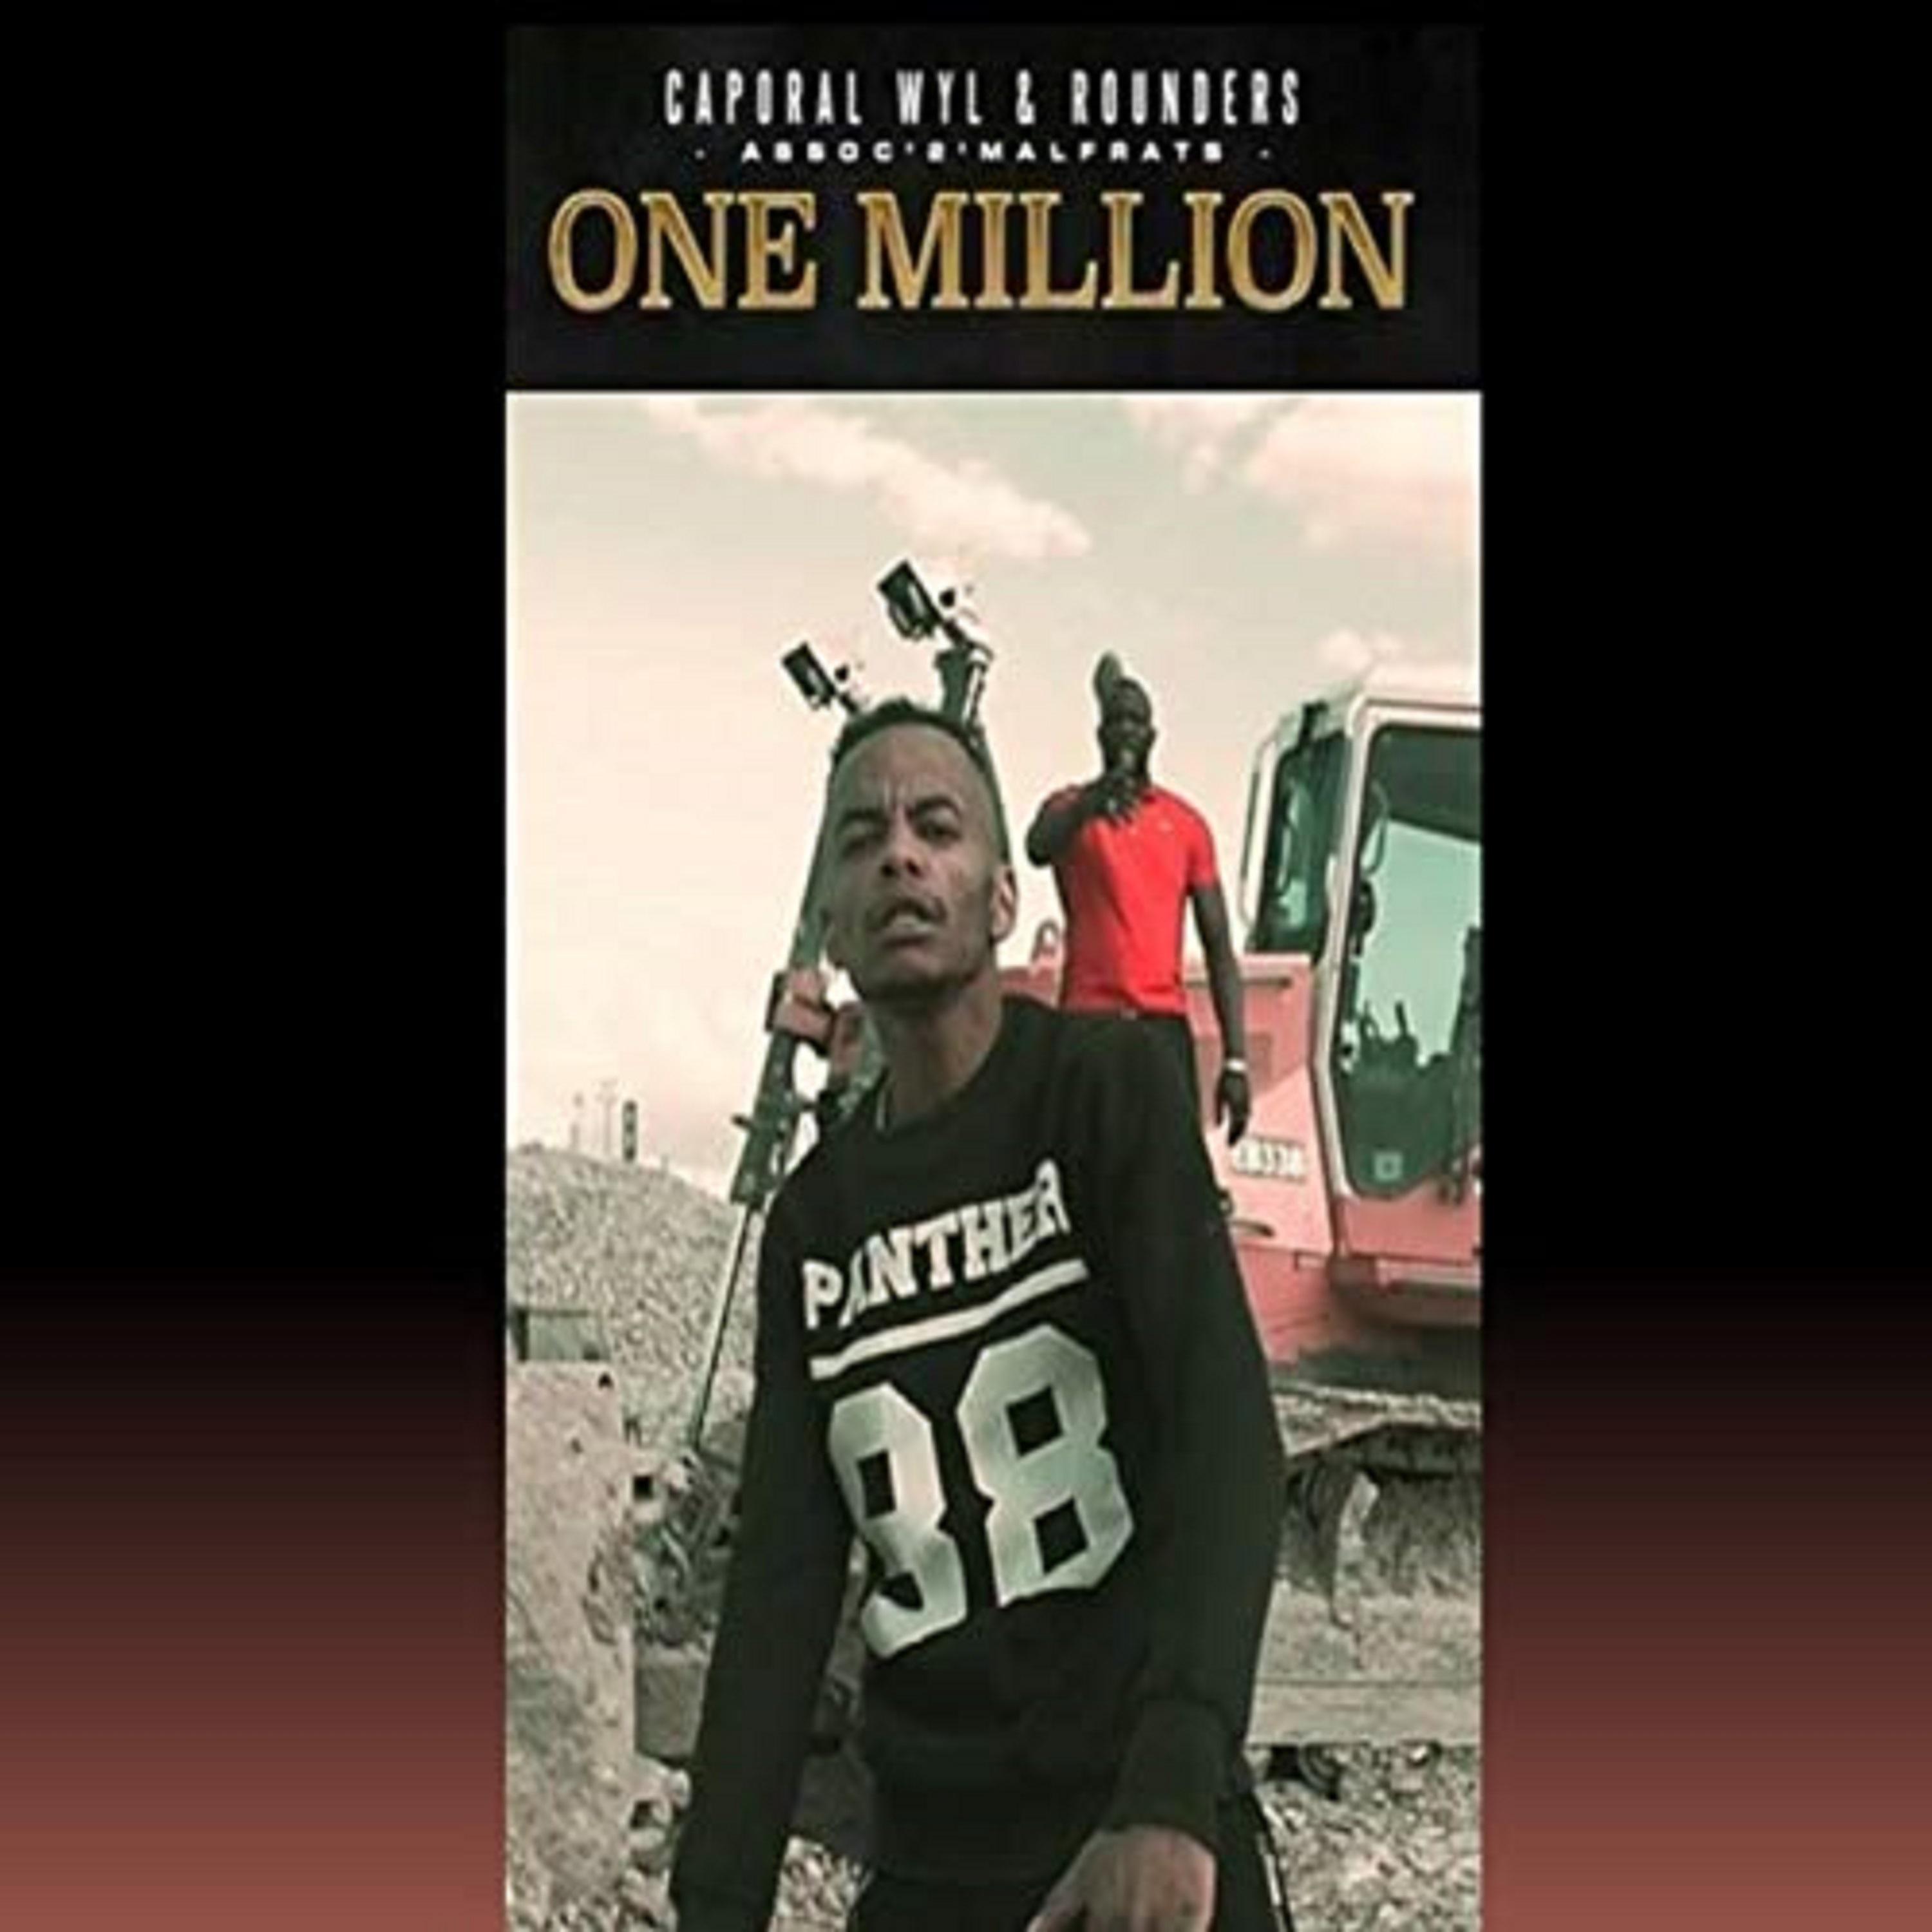 Постер альбома One Million (Assoc 2 malfrats)